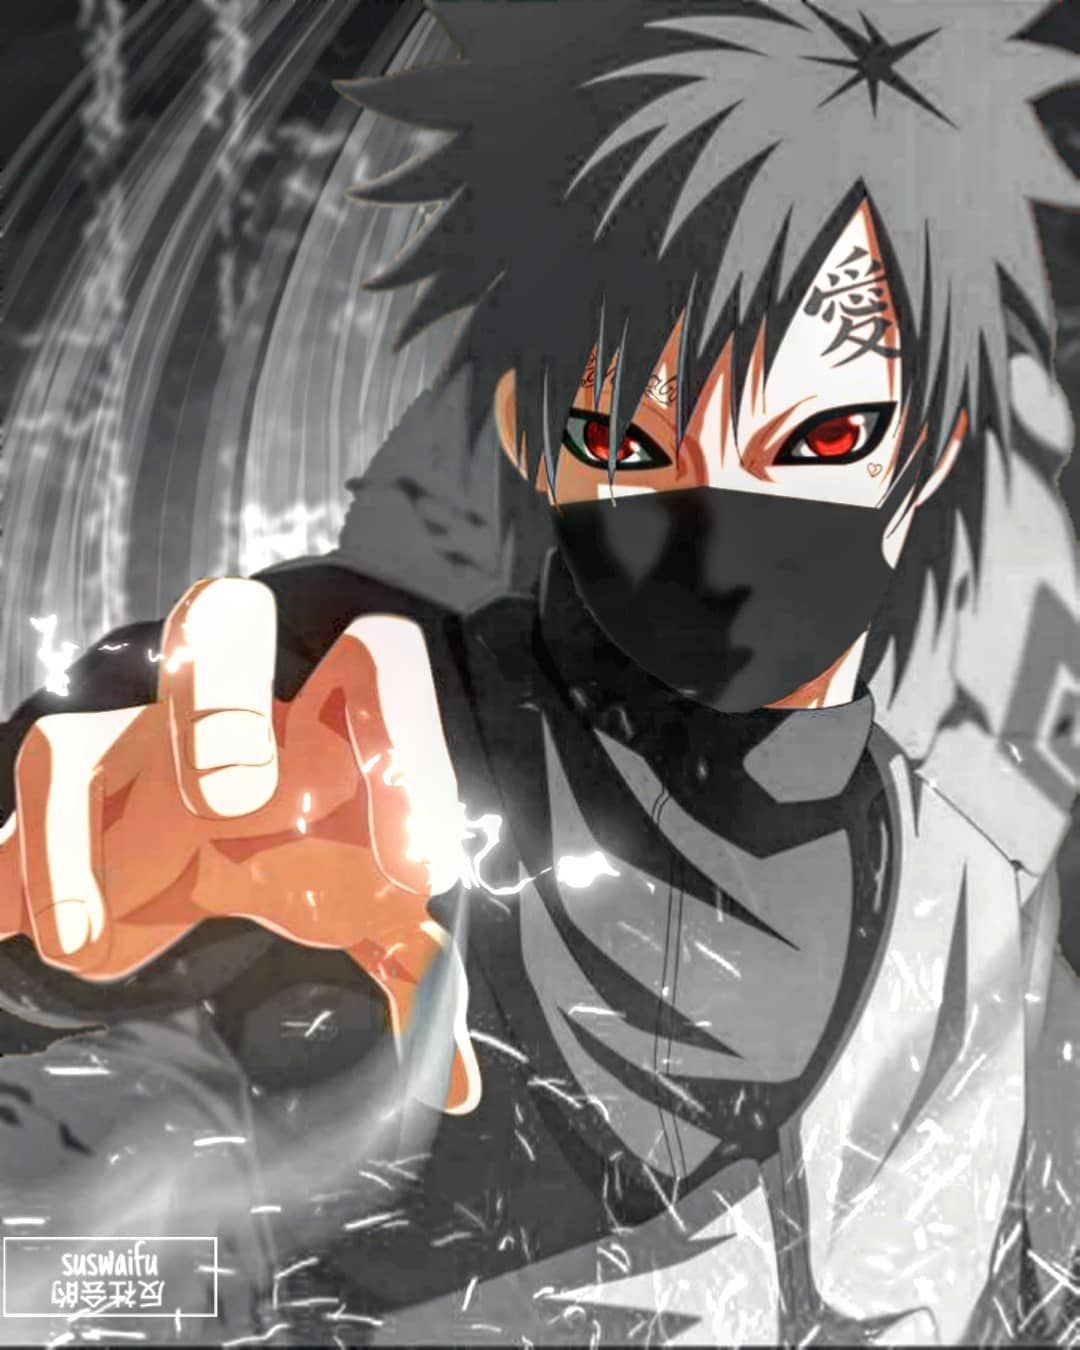 Dark Gaara Character: Gaara Origin: Naruto __ __ [#Anime][#Manga][#Otaku][#Art][#MangaBoy][#MangaGirl][#BlackAndWhite][#SadBoys]. Anime rapper, Anime ghost, Anime